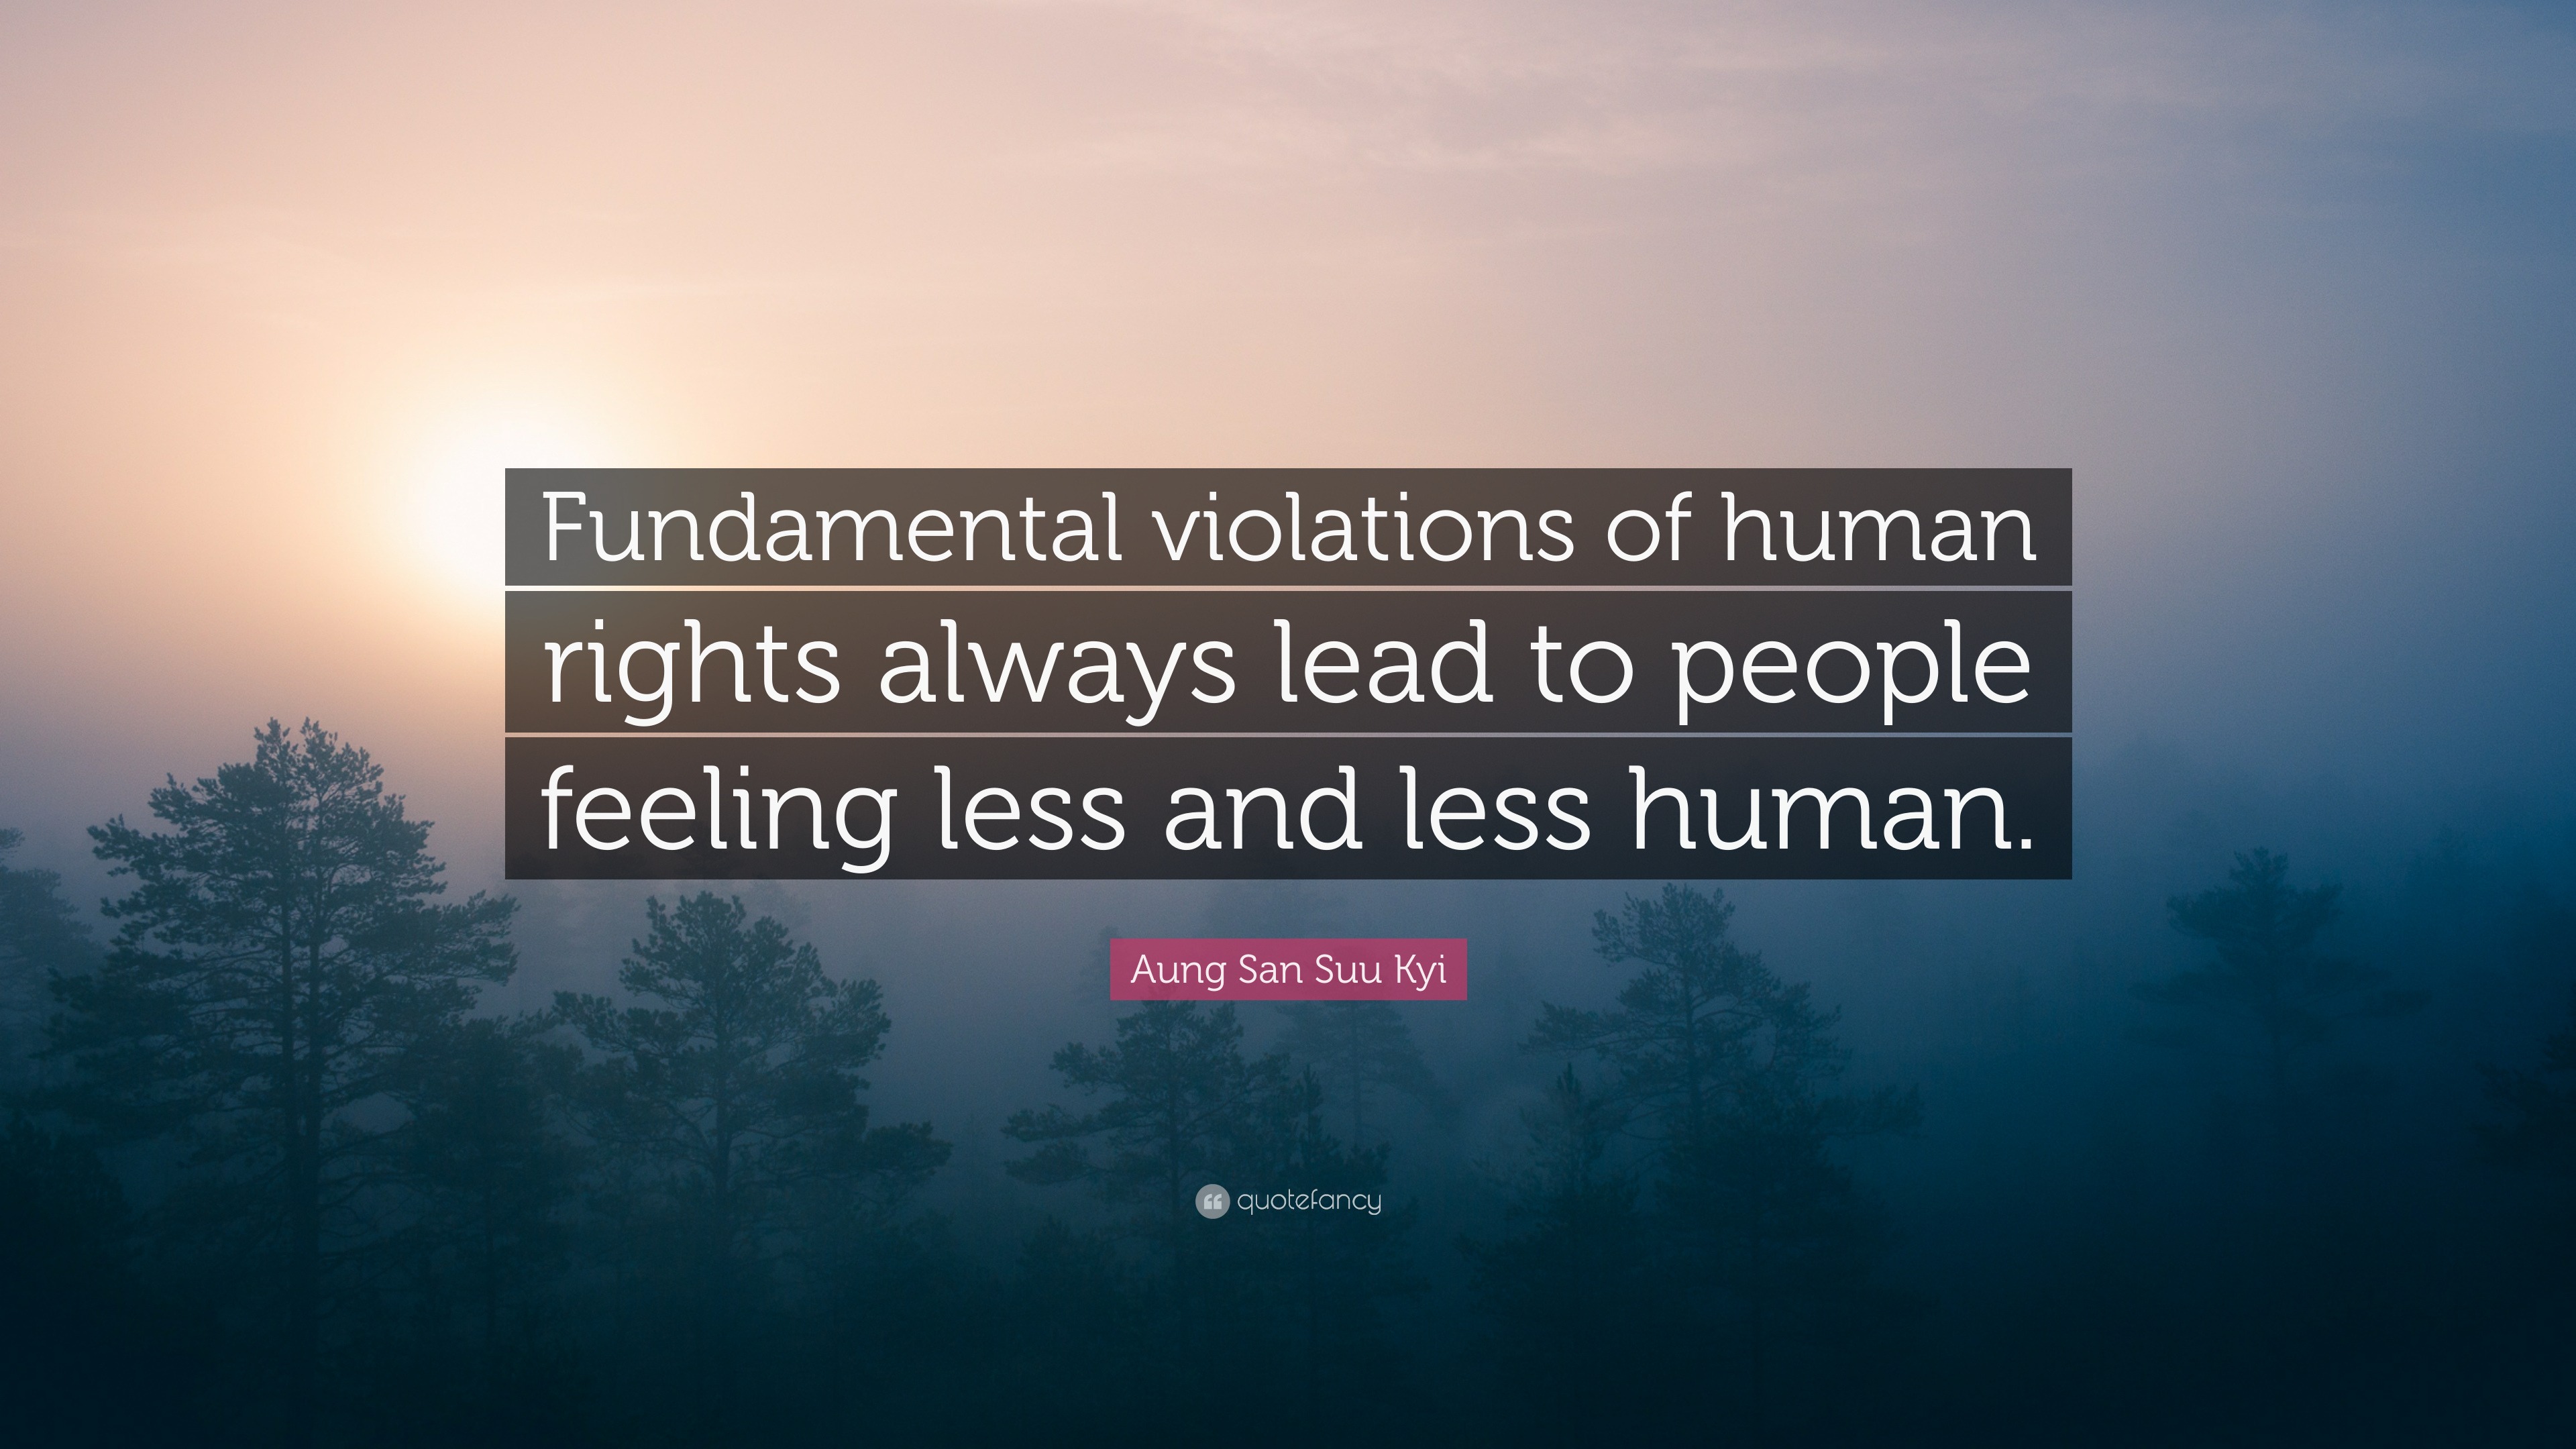 Aung San Suu Kyi Quote: "Fundamental violations of human ...